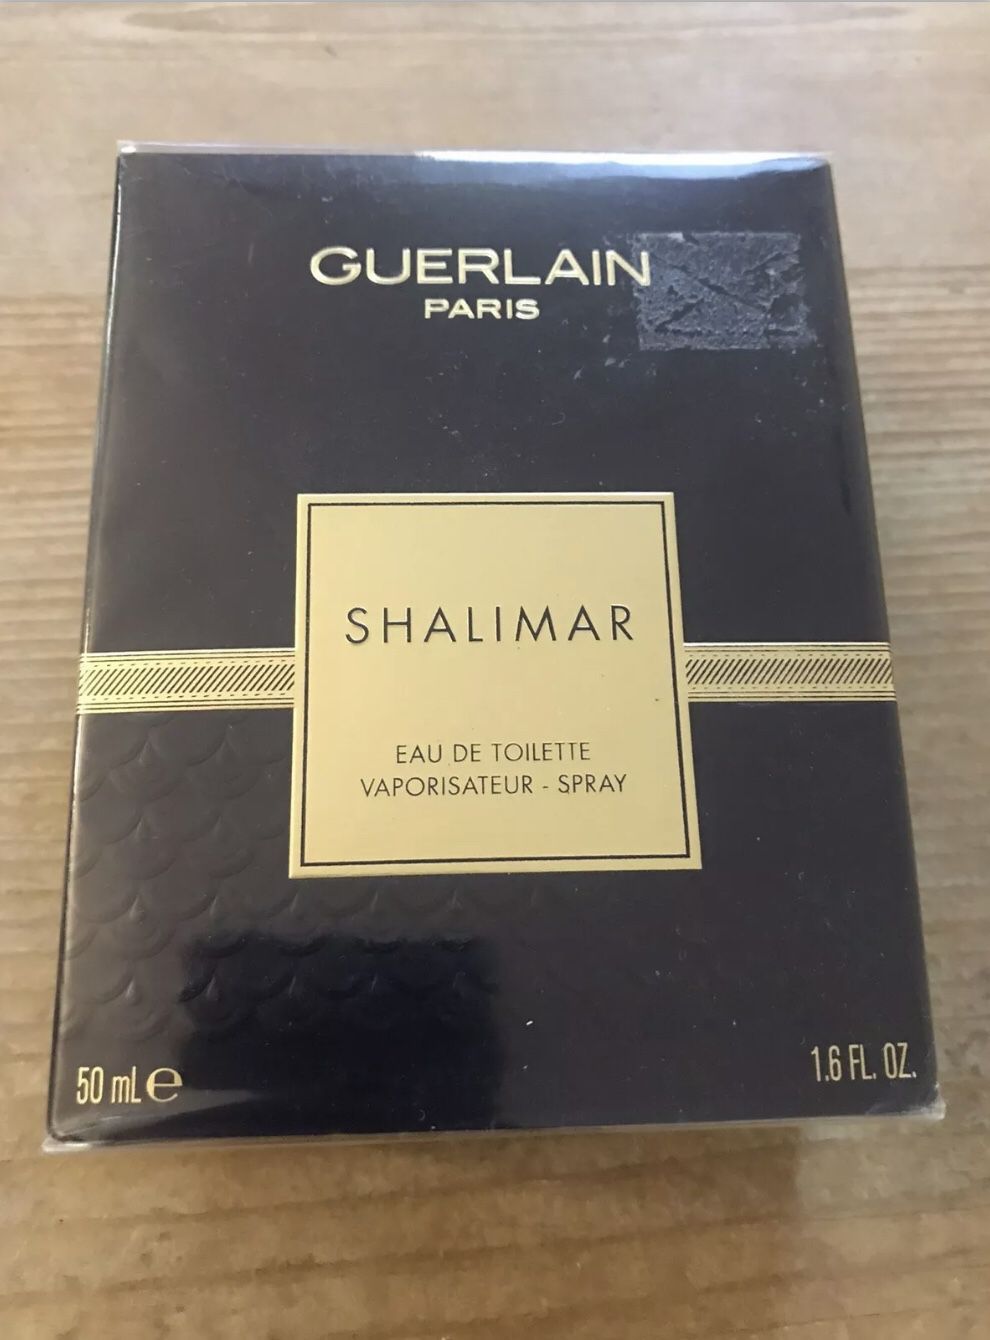 Brand New Shalimar 1.6 Oz Perfume - Sealed Never Opened - Shipping Available